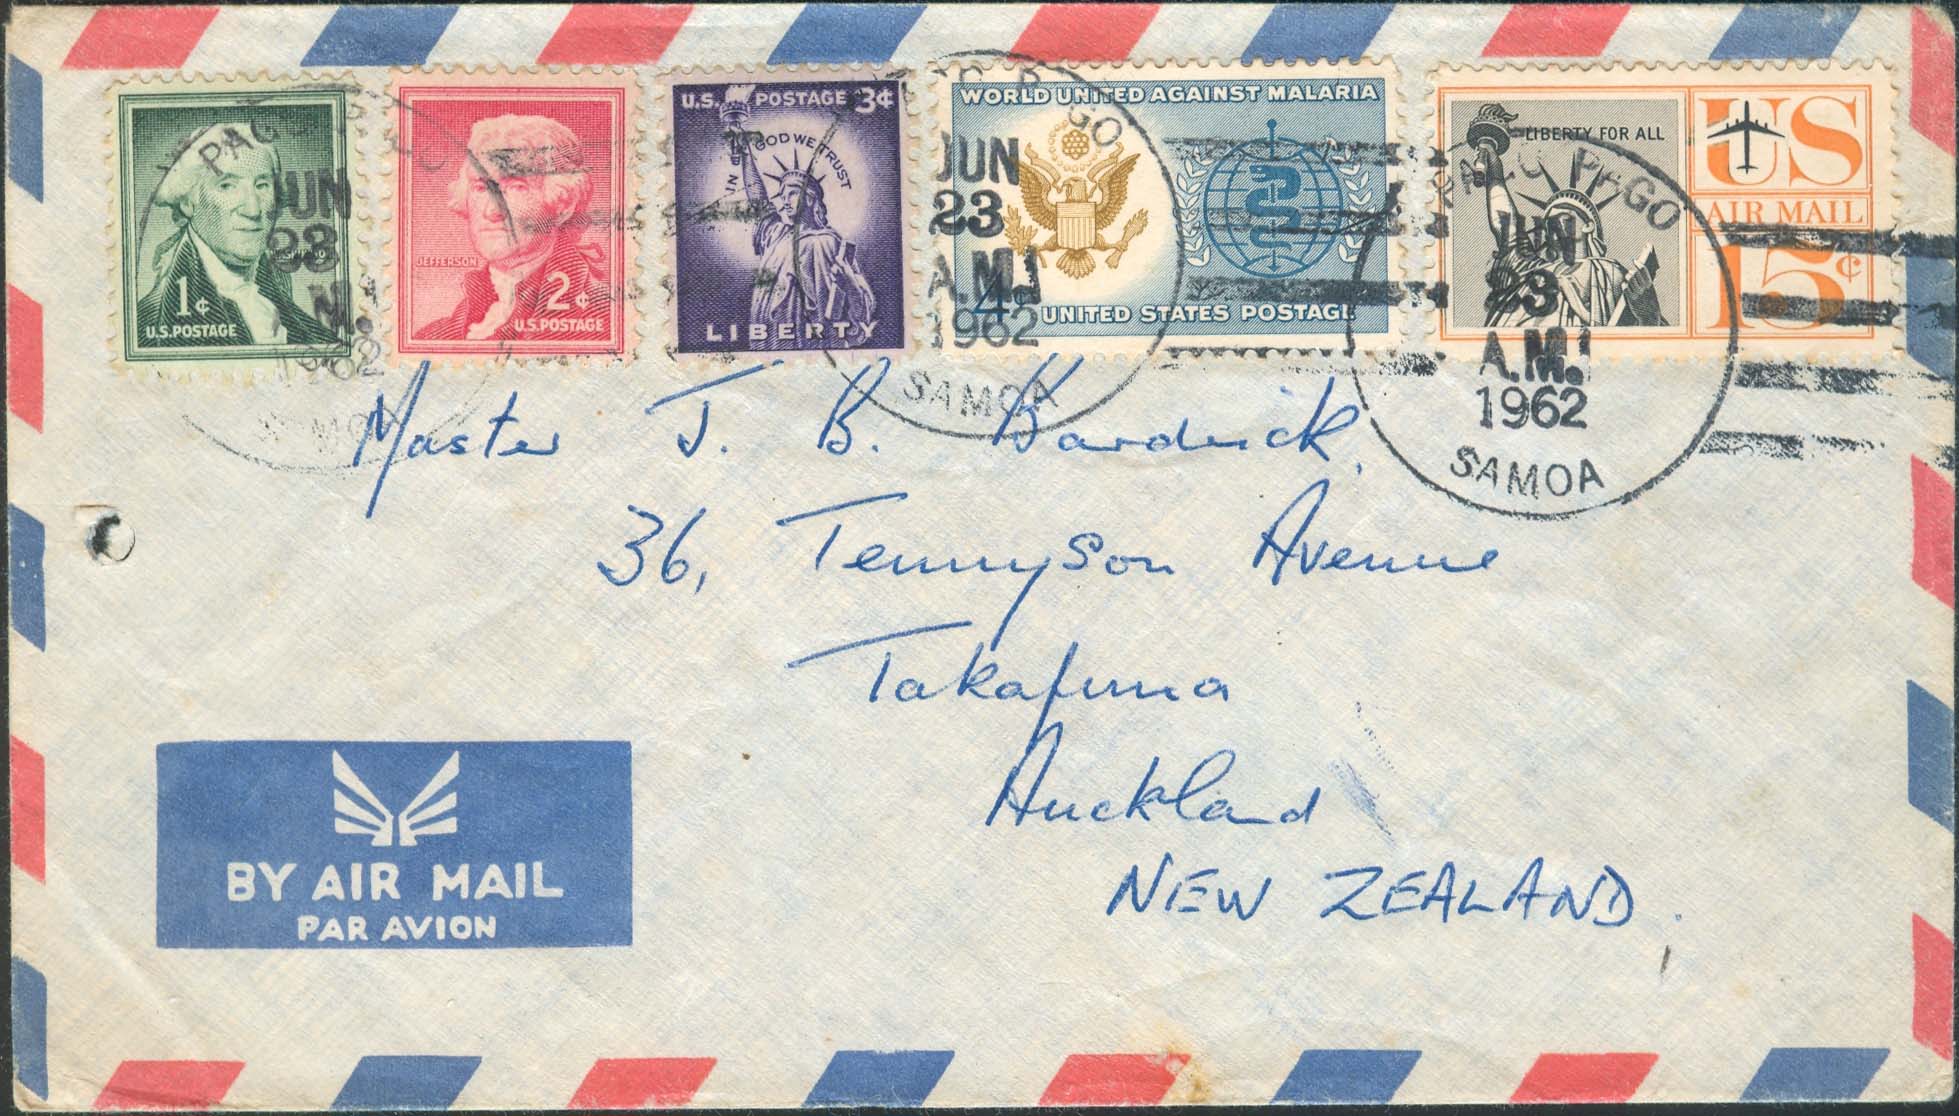 1962, June 23rd, Pago Pago, Samoa to New Zealand